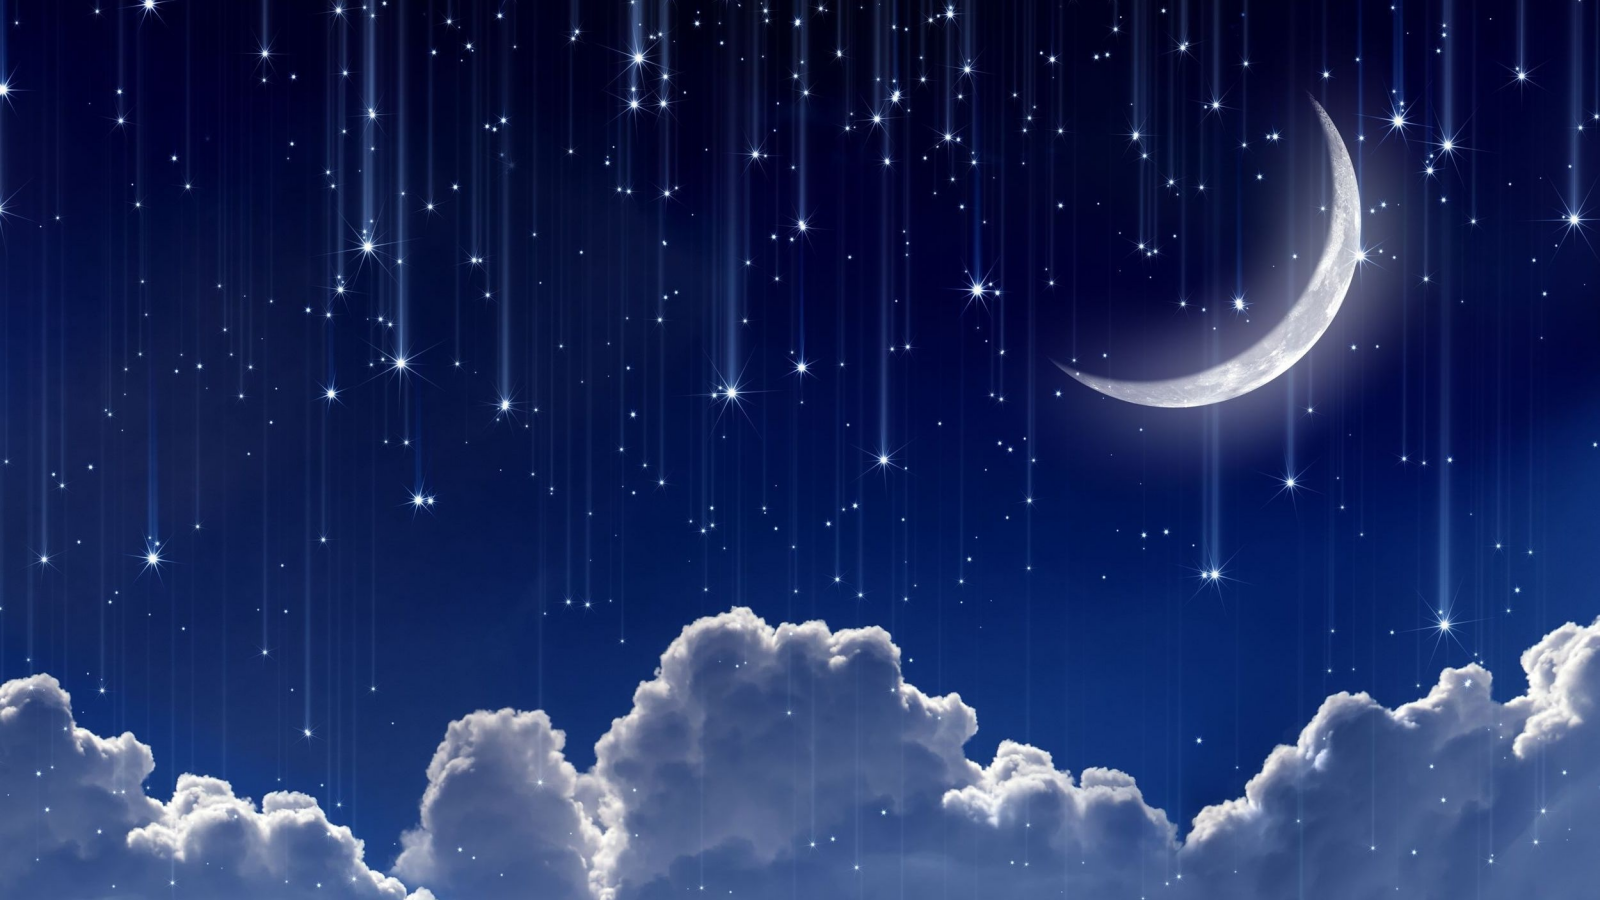 космос, облака, звезды, полумесяц, месяц, небо, луна